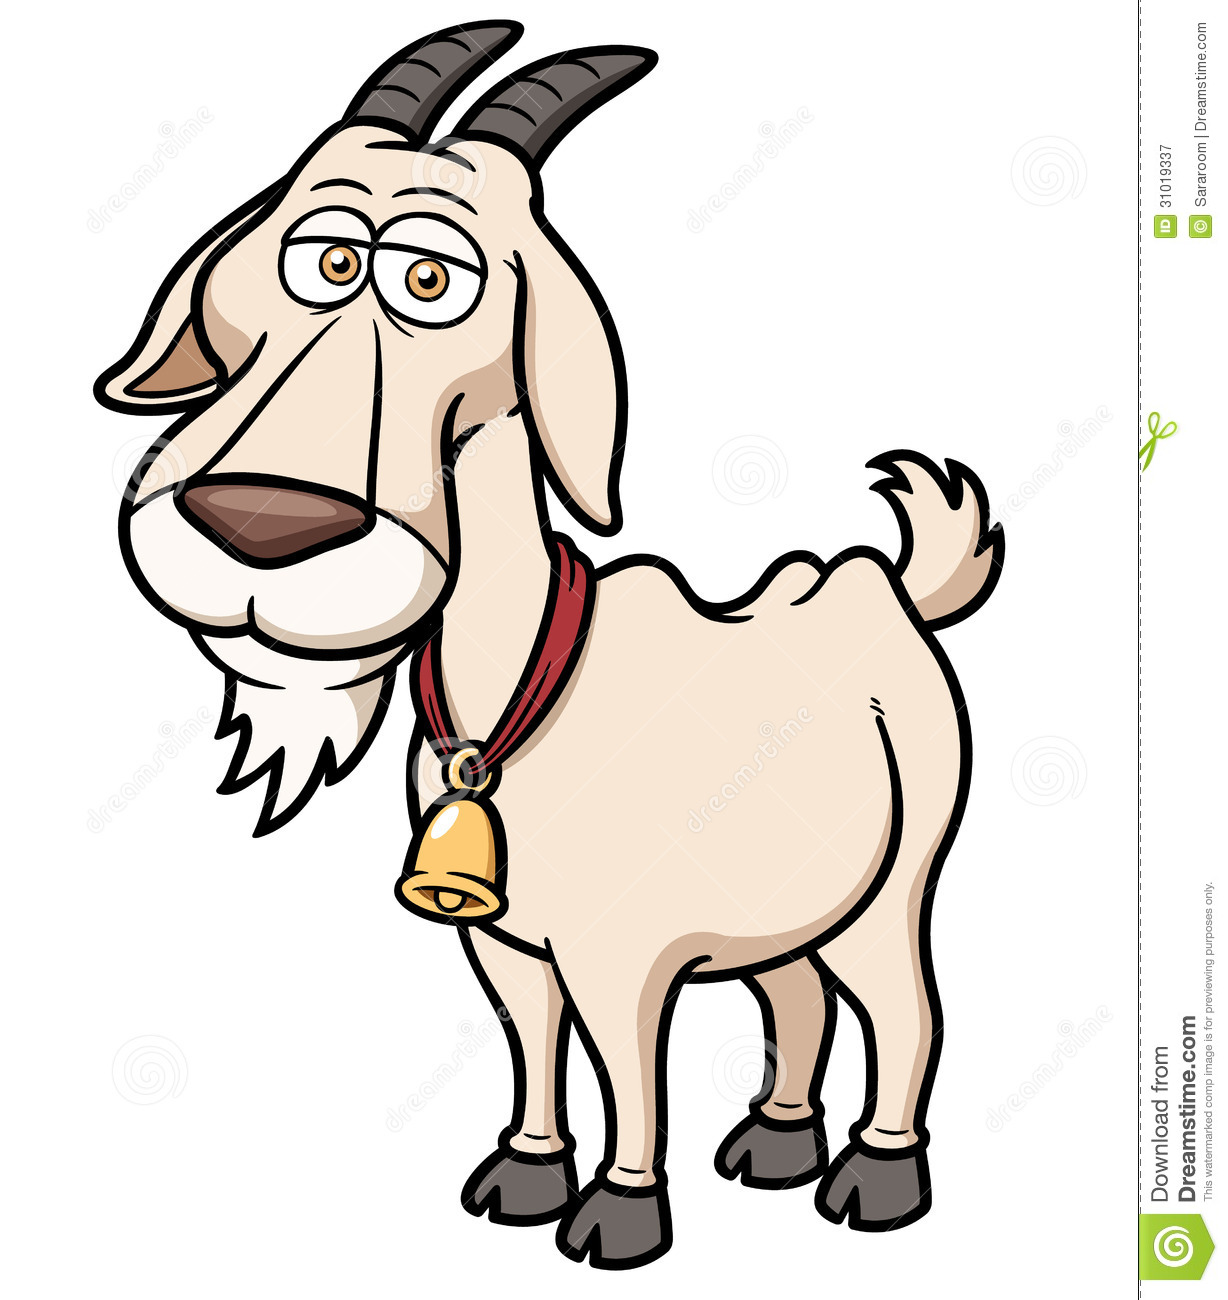 Goat Cartoon Royalty Free Stock Photography   Image  31019337